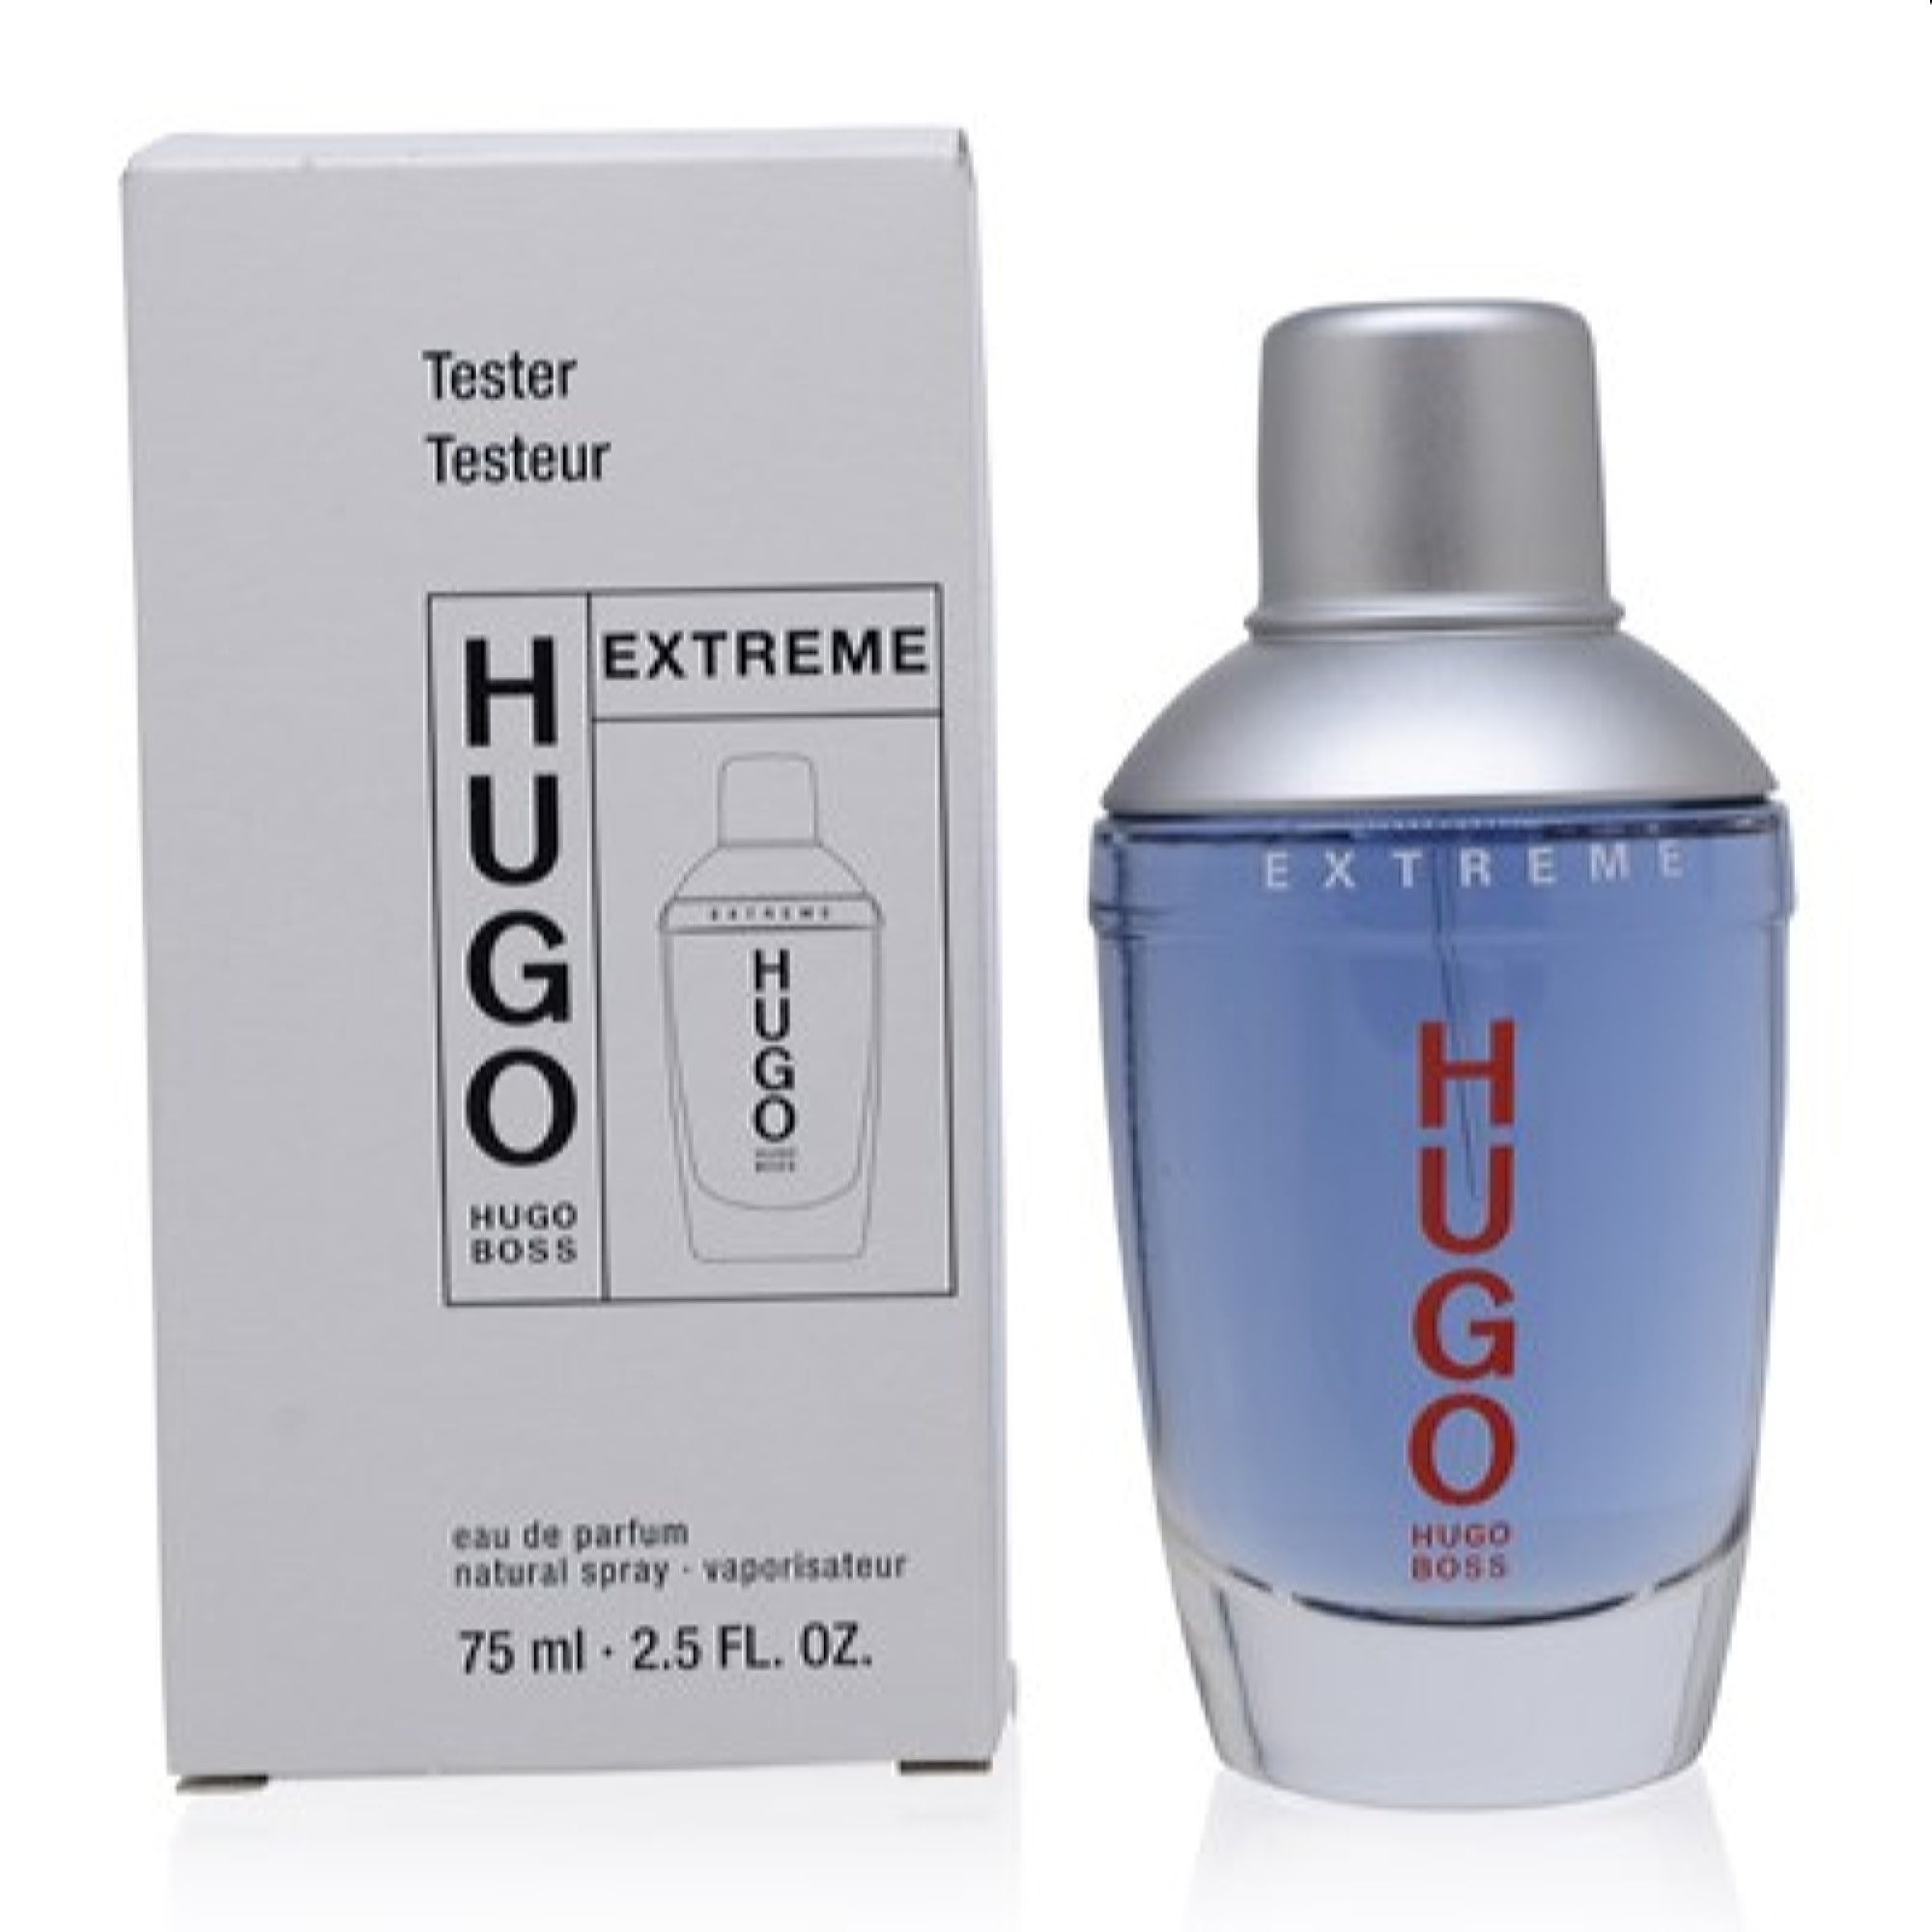 Hugo Woman Extreme by Hugo Boss 2.5 oz EDP Perfume for Women New In Box